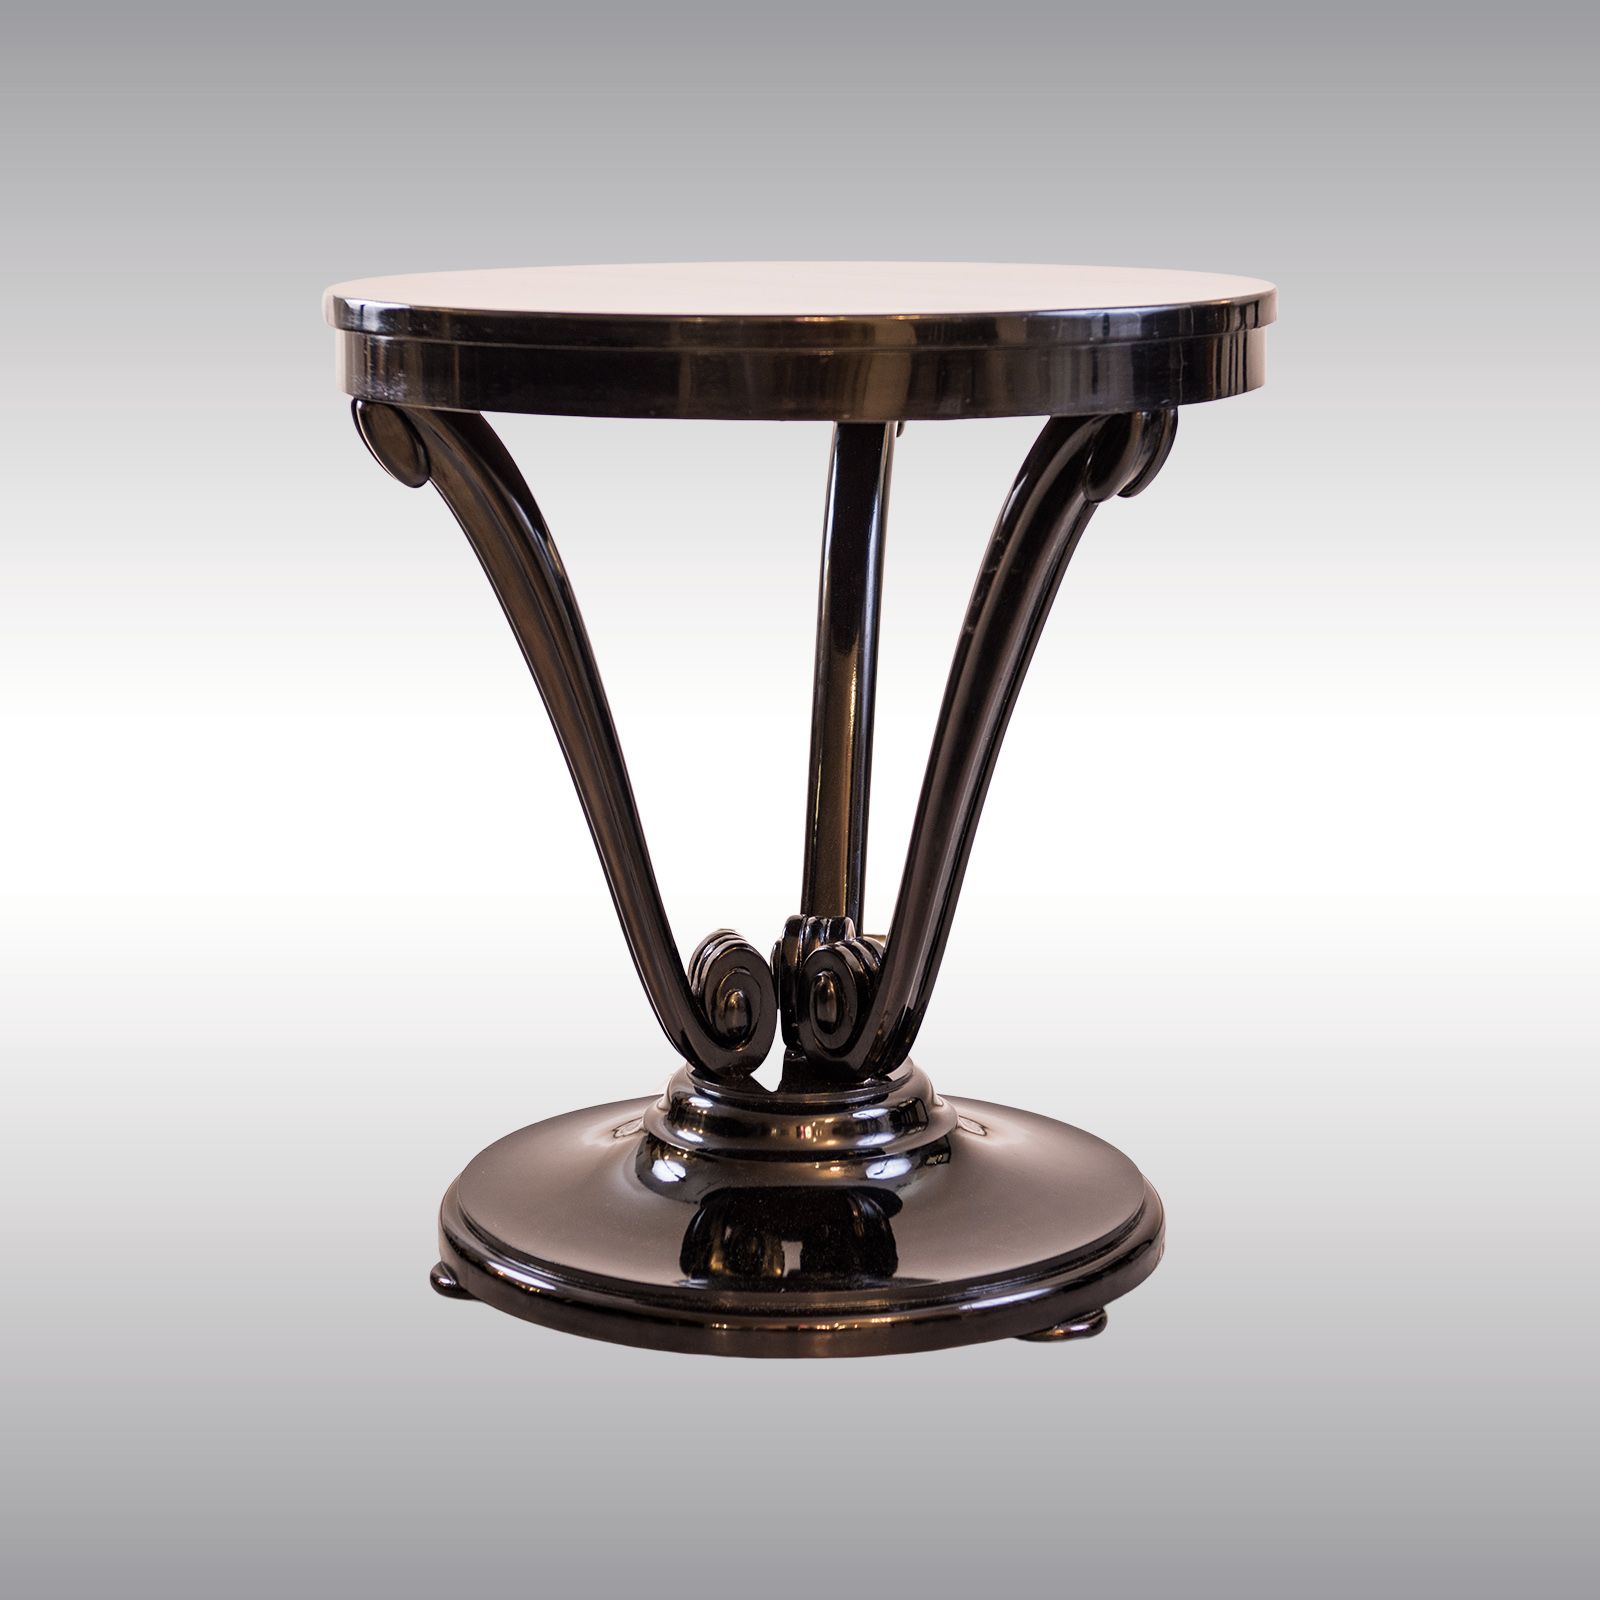 WOKA LAMPS VIENNA - OrderNr.: 70077|Coffe-Table attributed to Otto Prutscher and Thonet - Design: Otto Prutscher